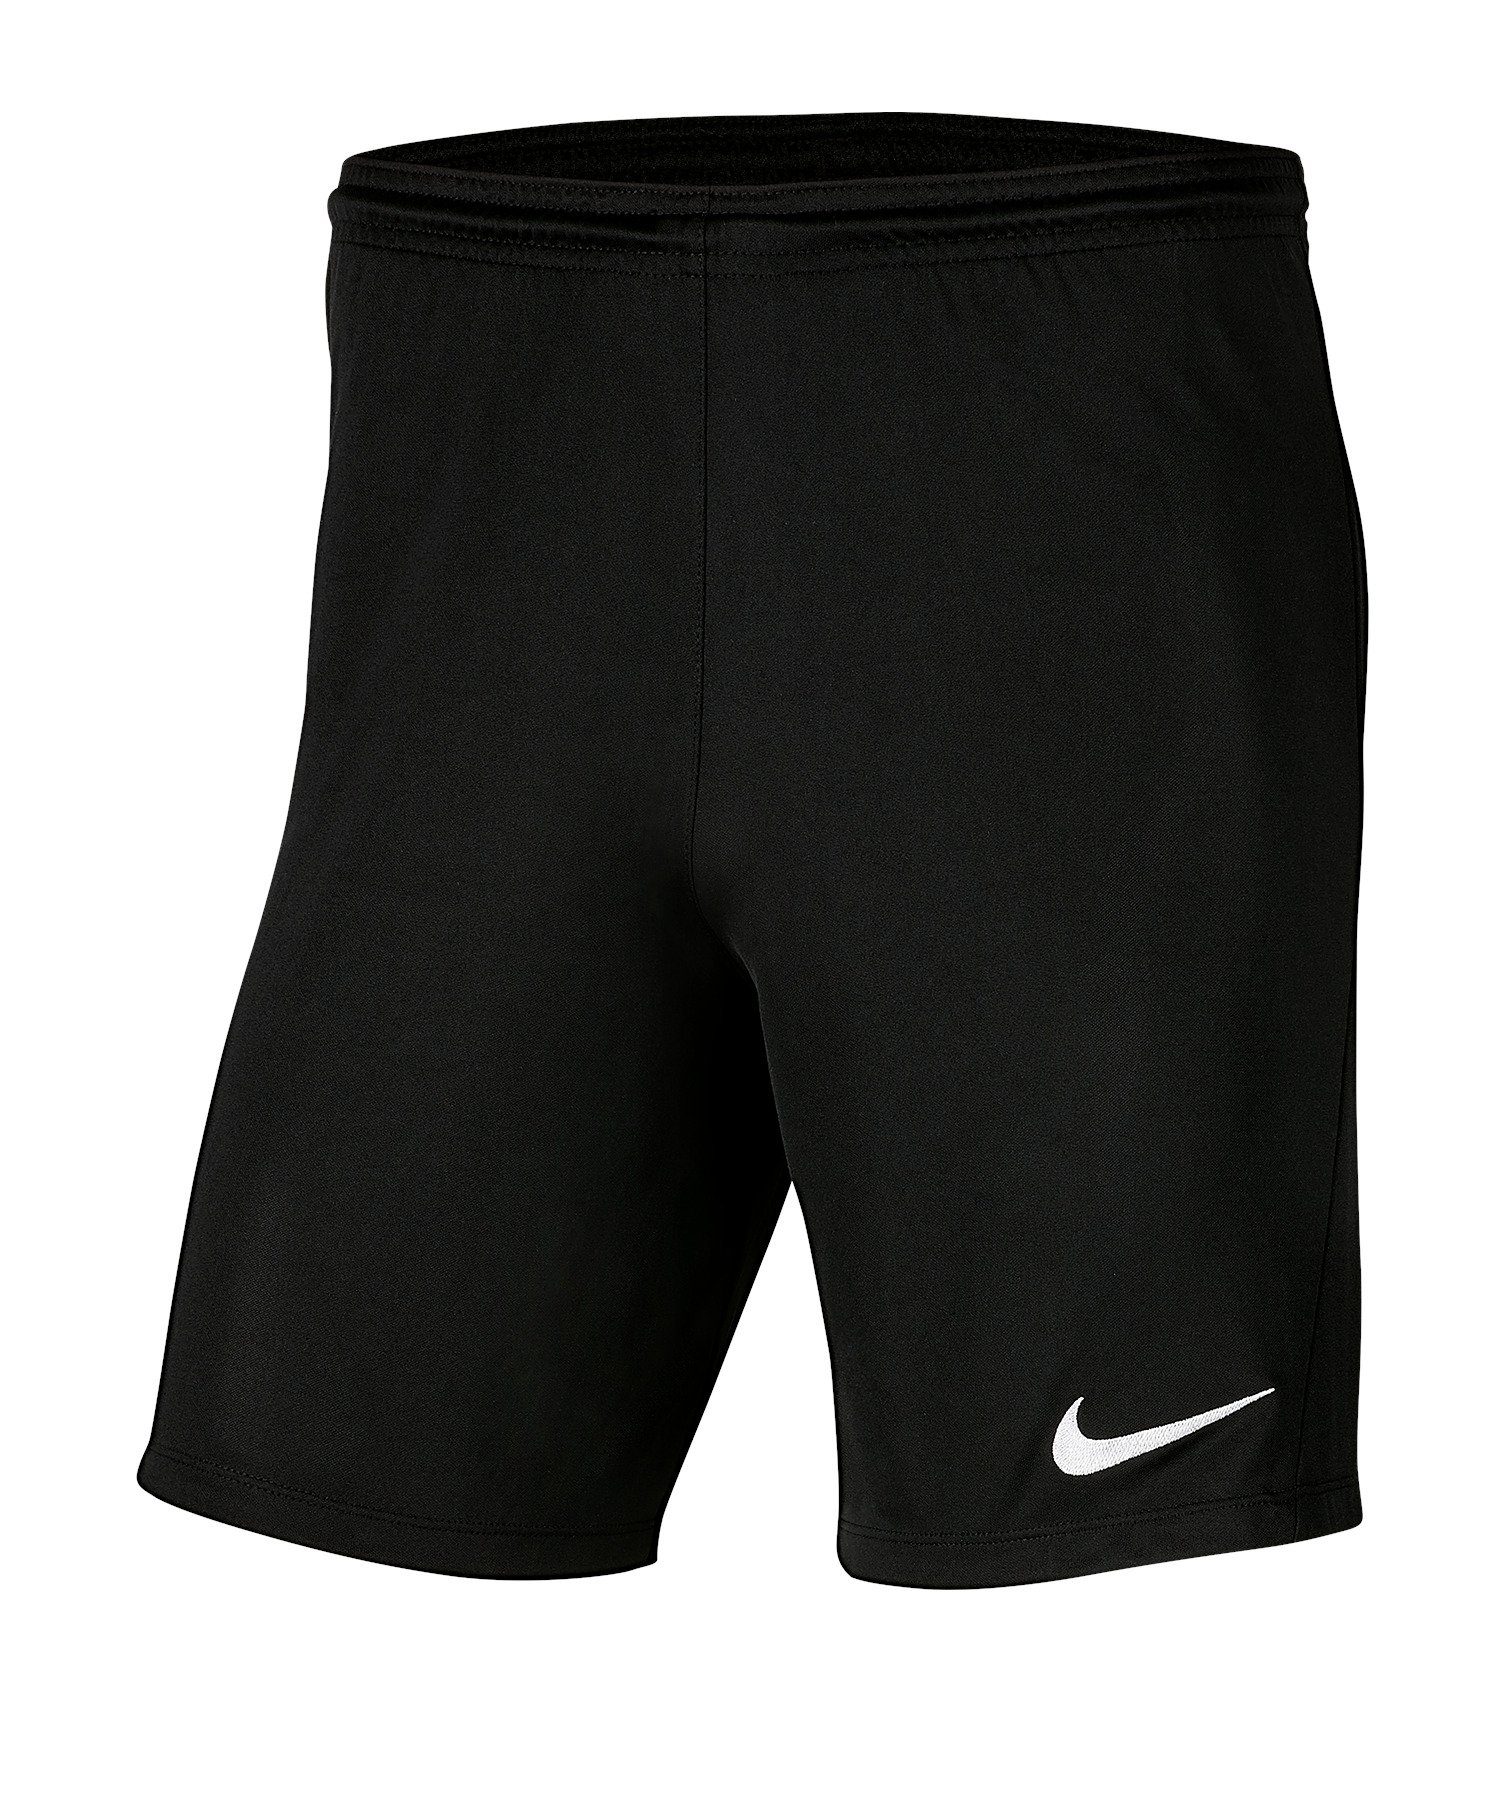 Nike Sporthose Park III Short schwarz